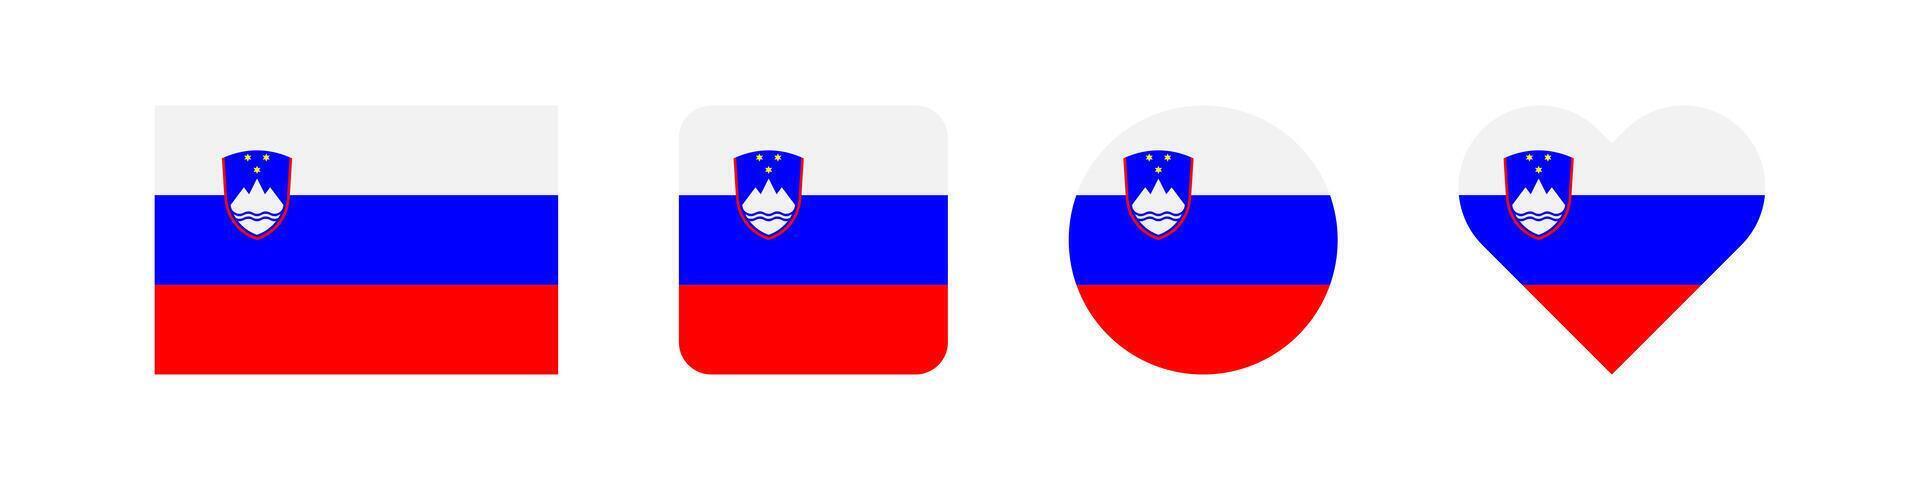 Slowenien National Flagge. Slowenisch Land Emblem Vektor. Europa Banner von Land. vektor